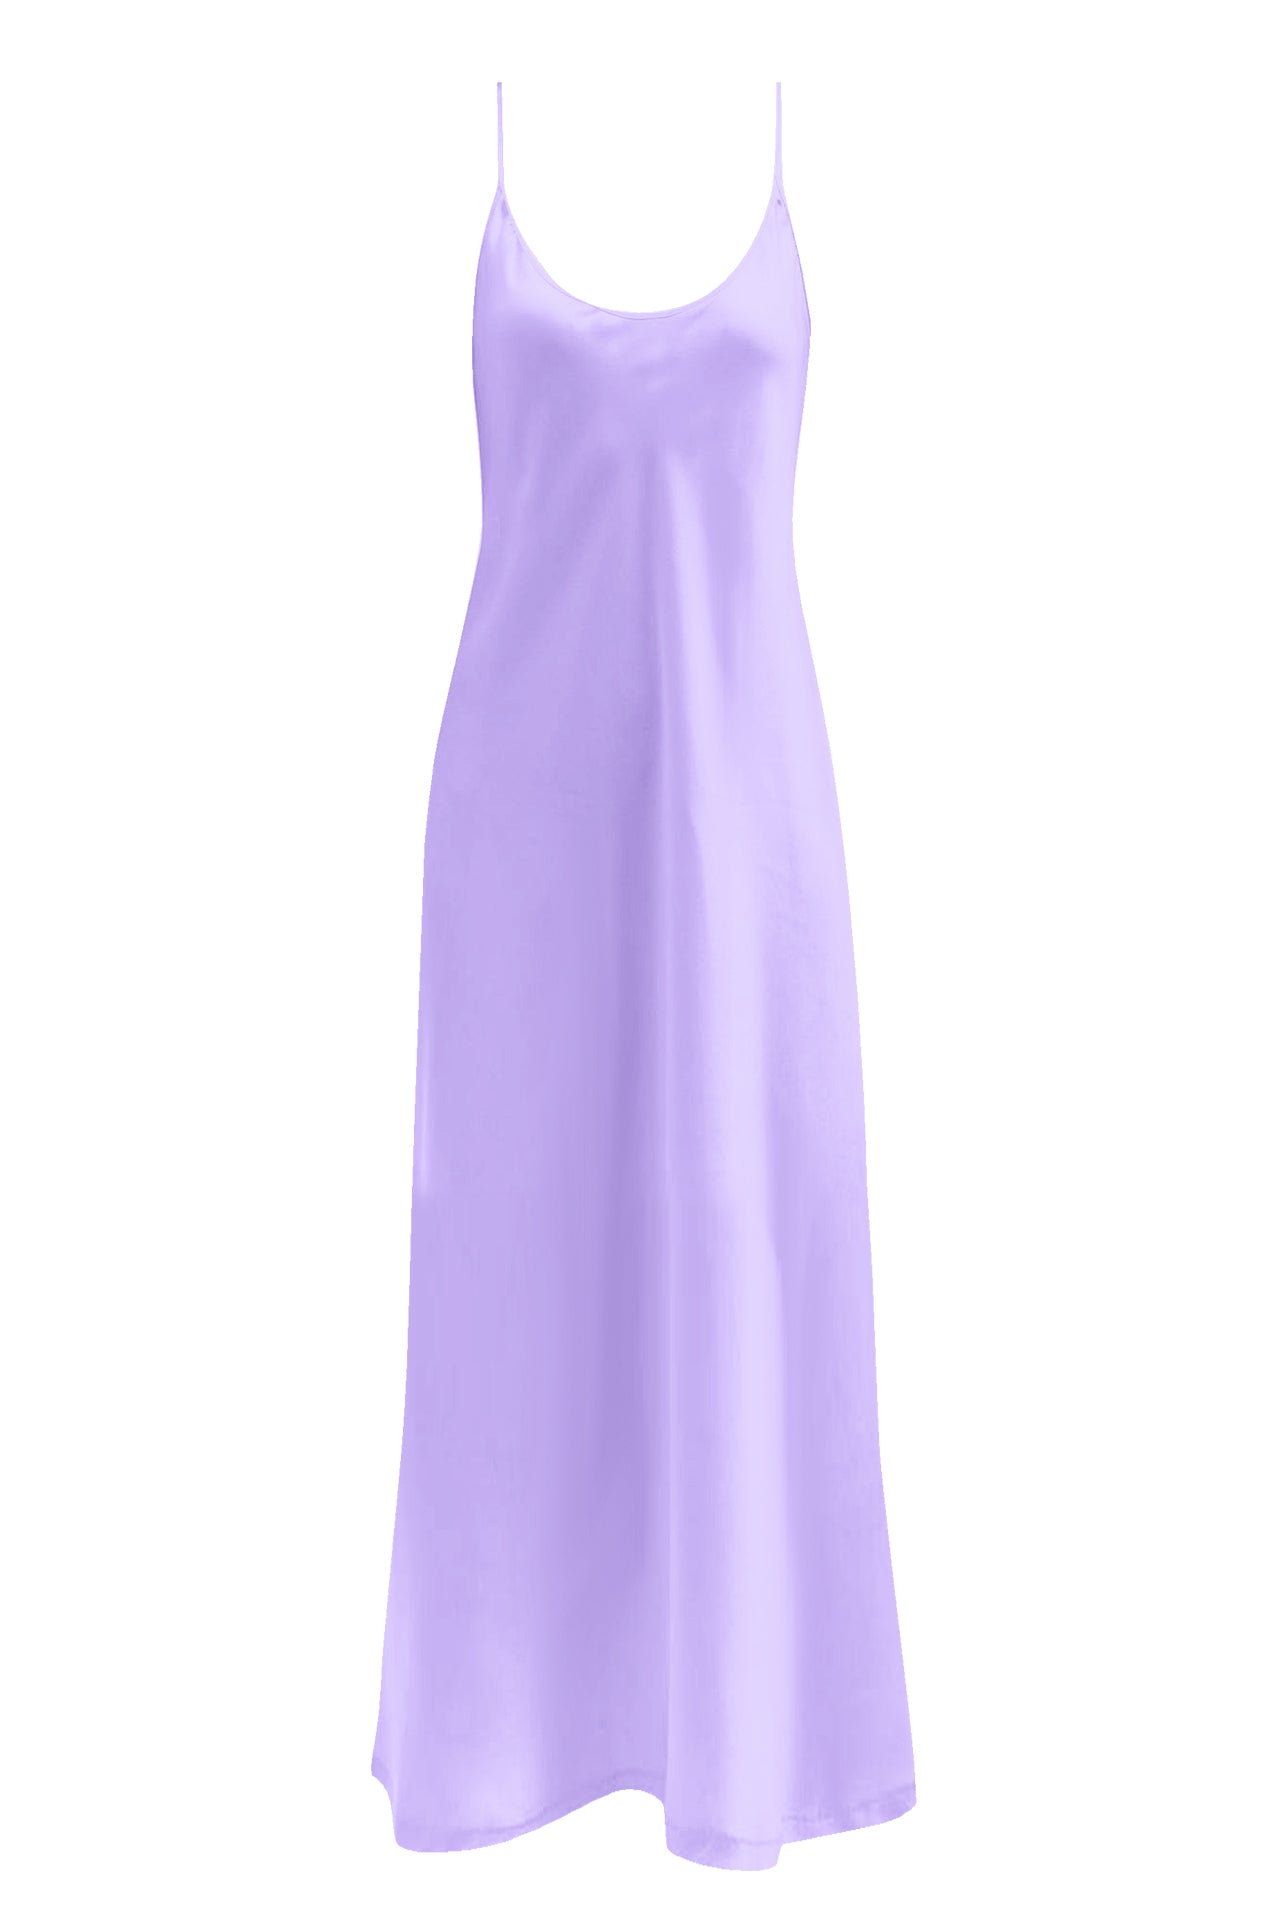 "Kyle X Shahida" "camisole maxi dress" "purple slip dress" "long cami dress"